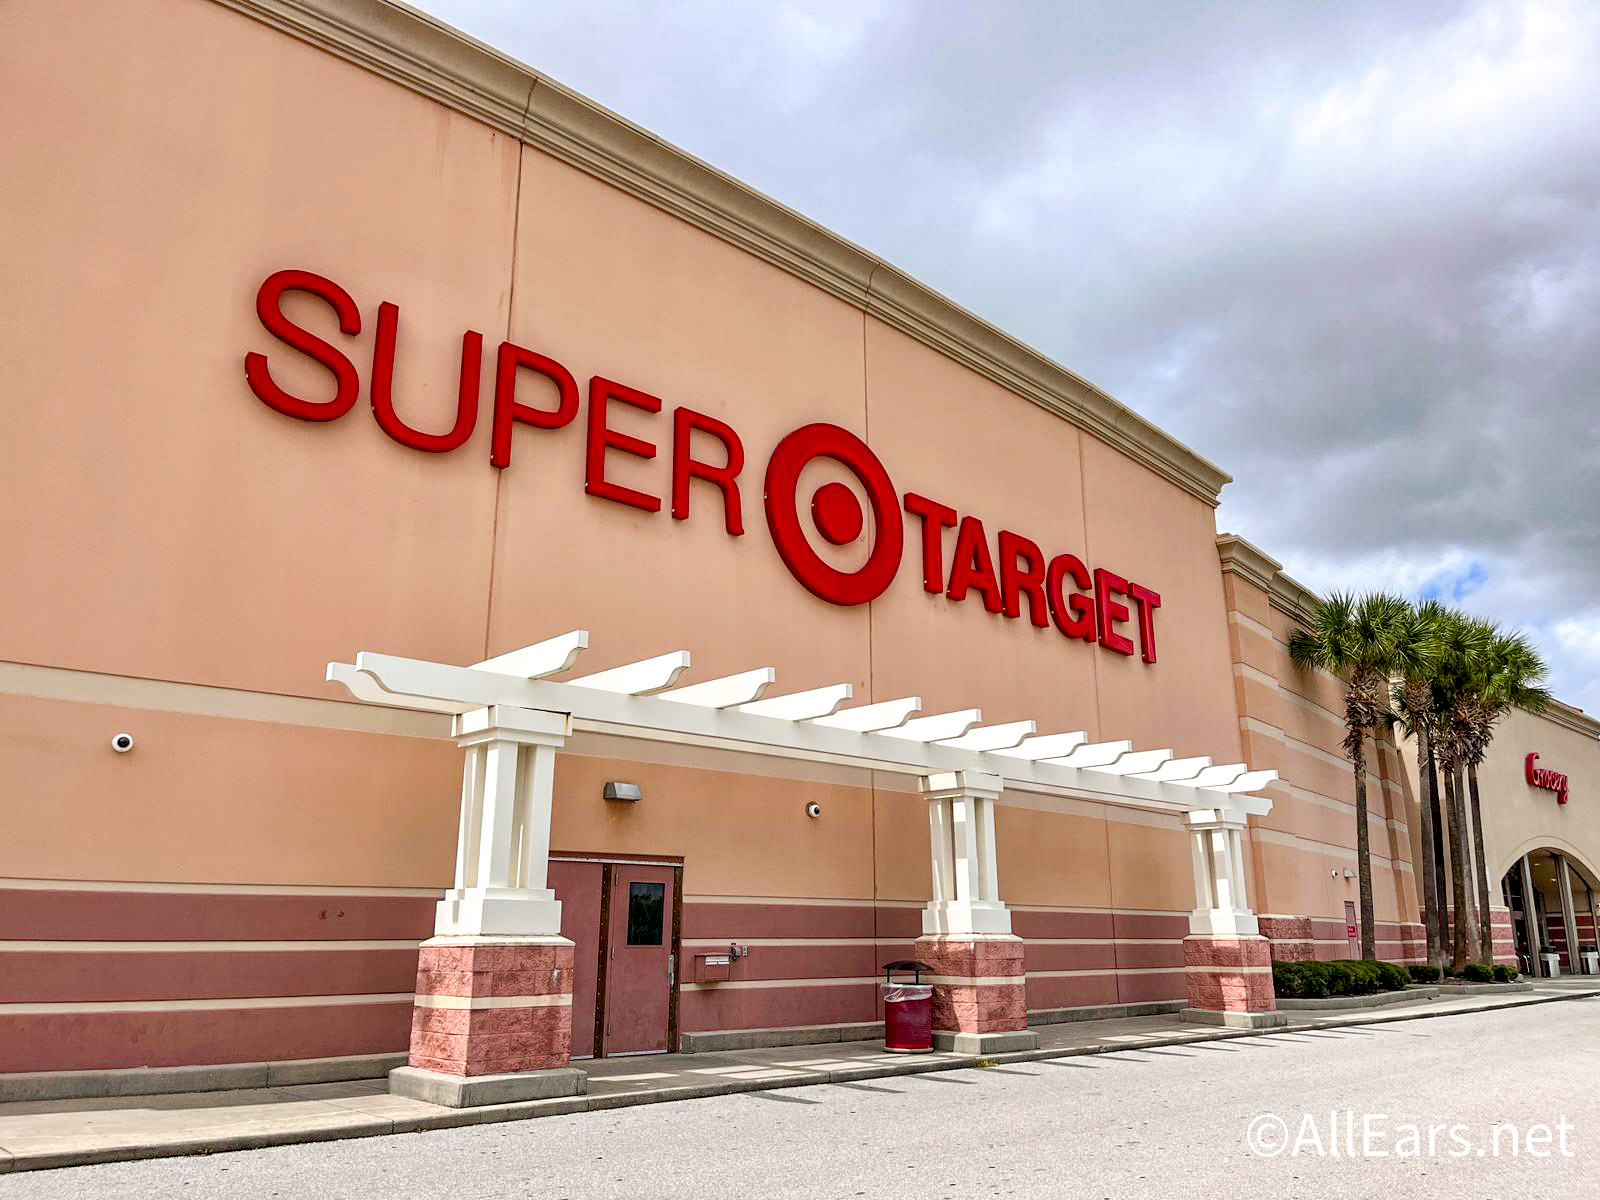 Super target Orlando FL near Disney : r/ActionFigures